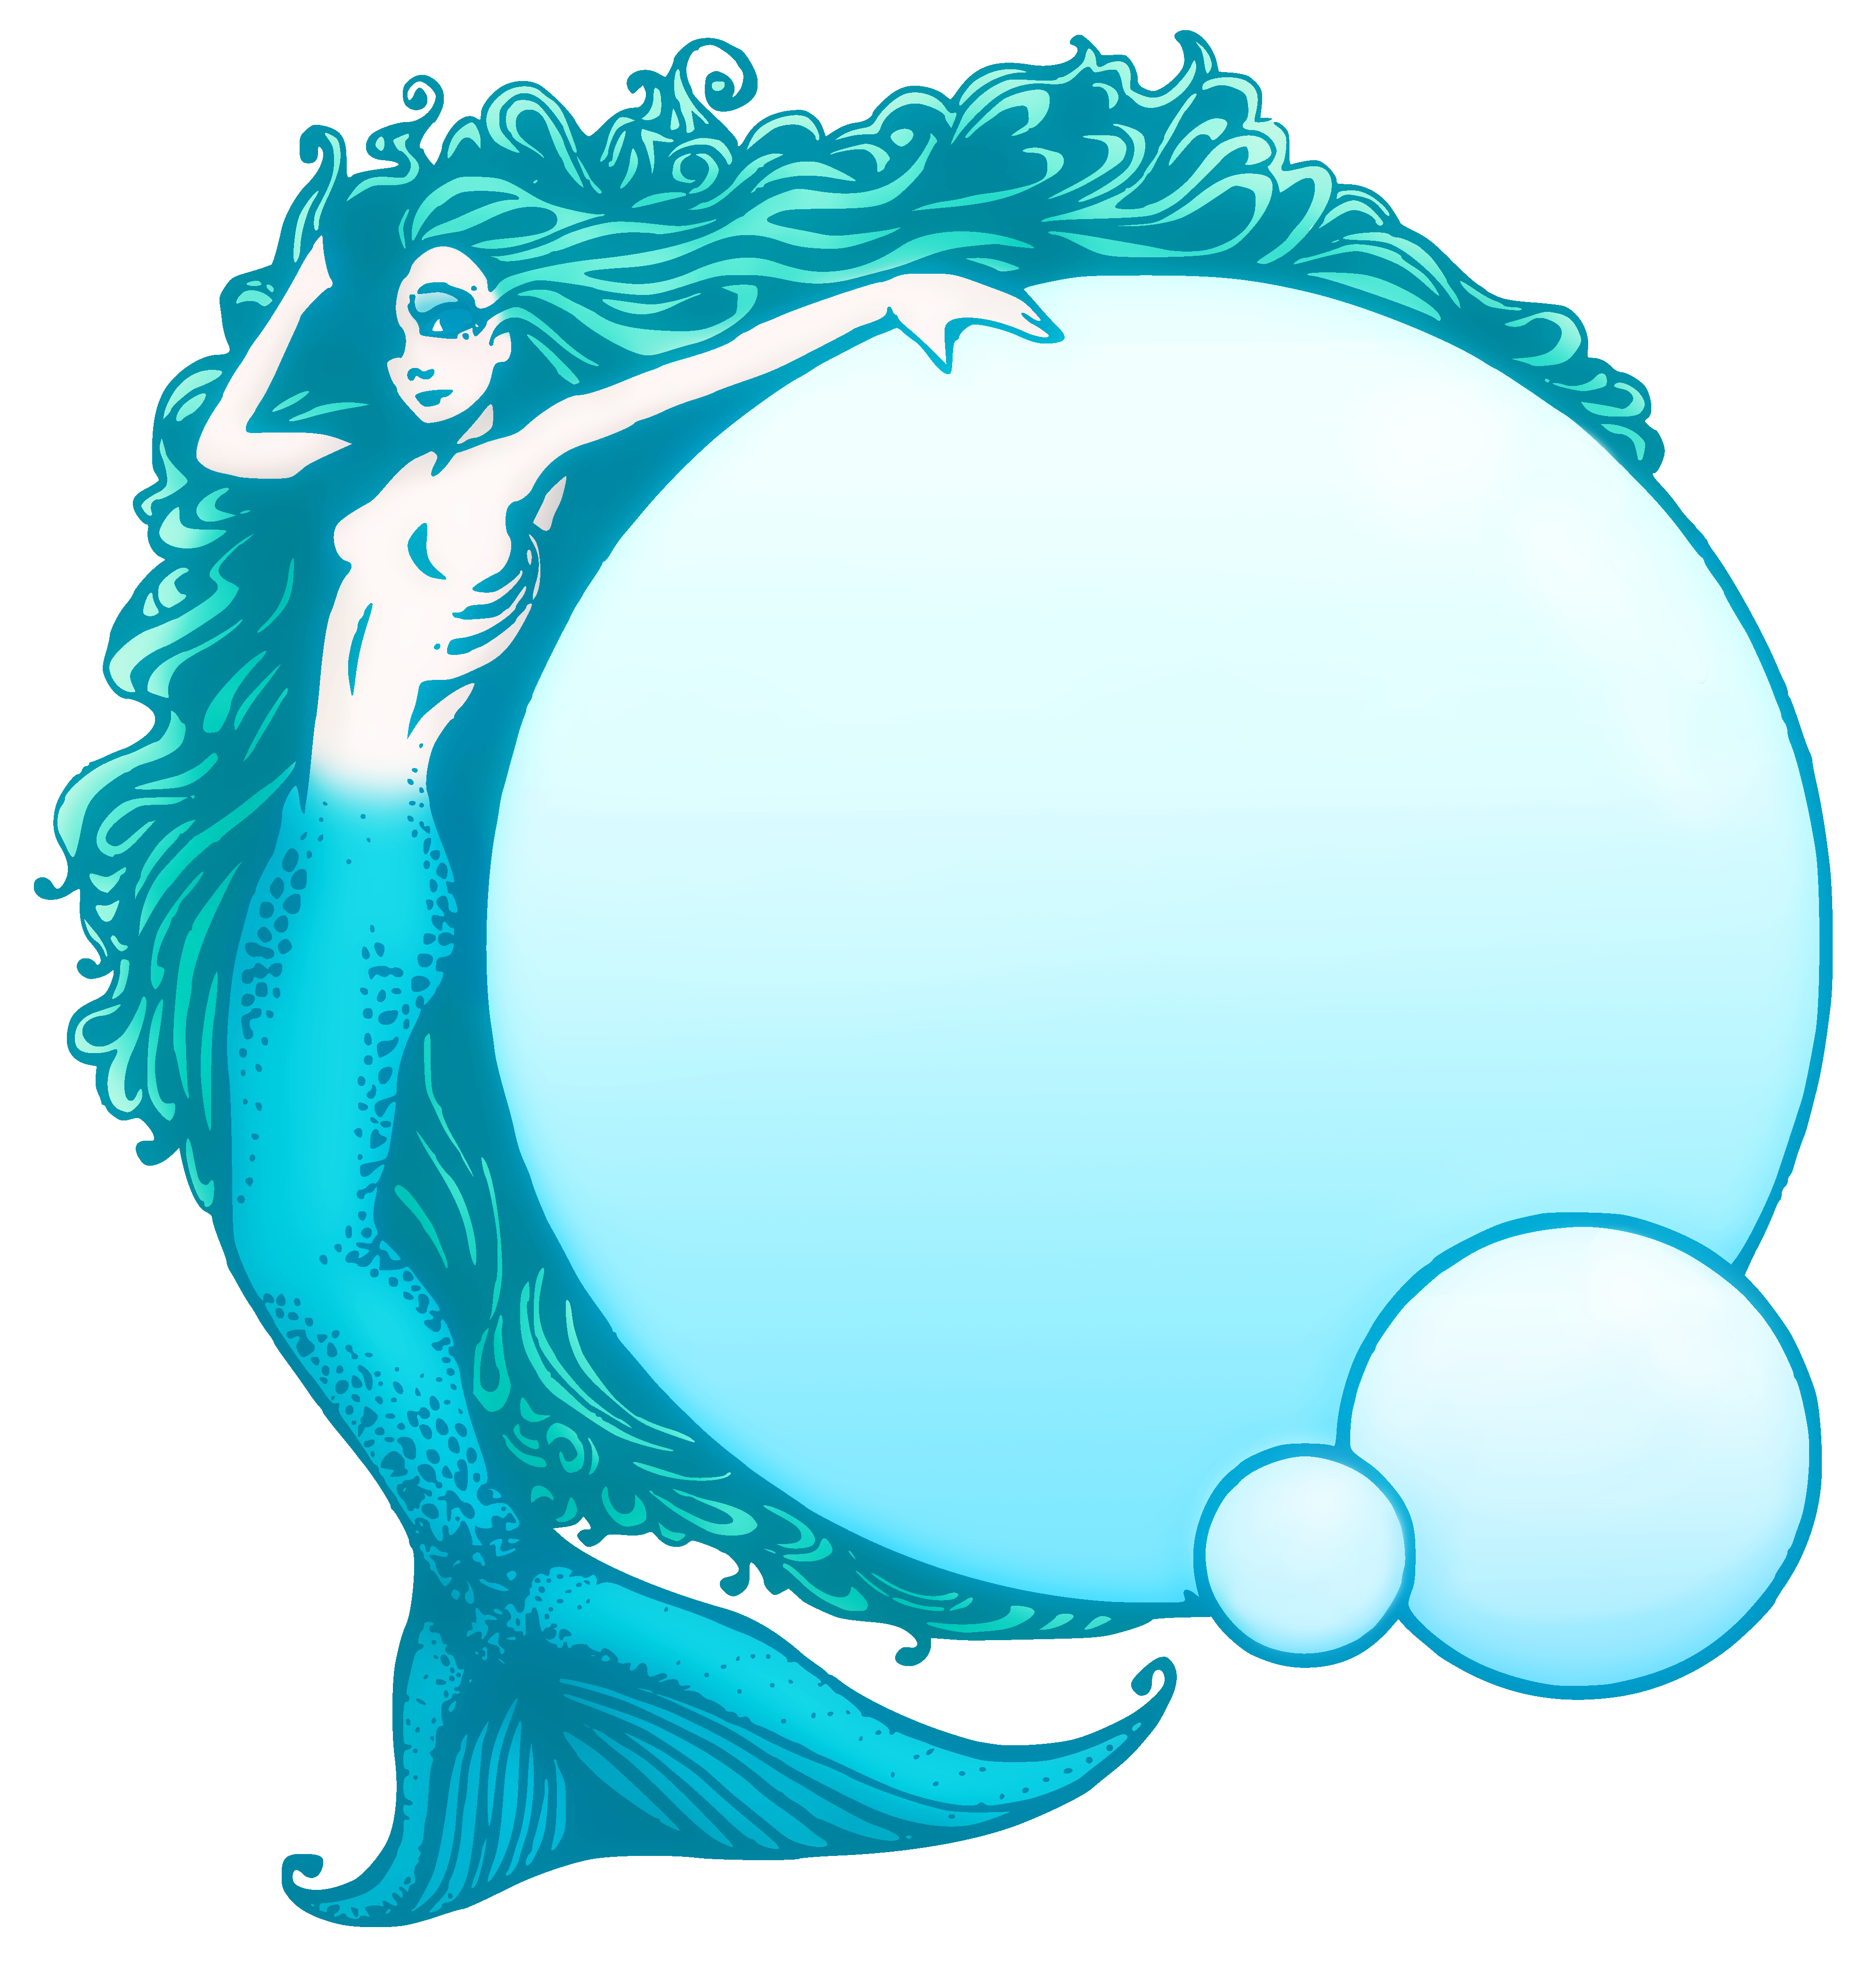 Mermaid public domain.